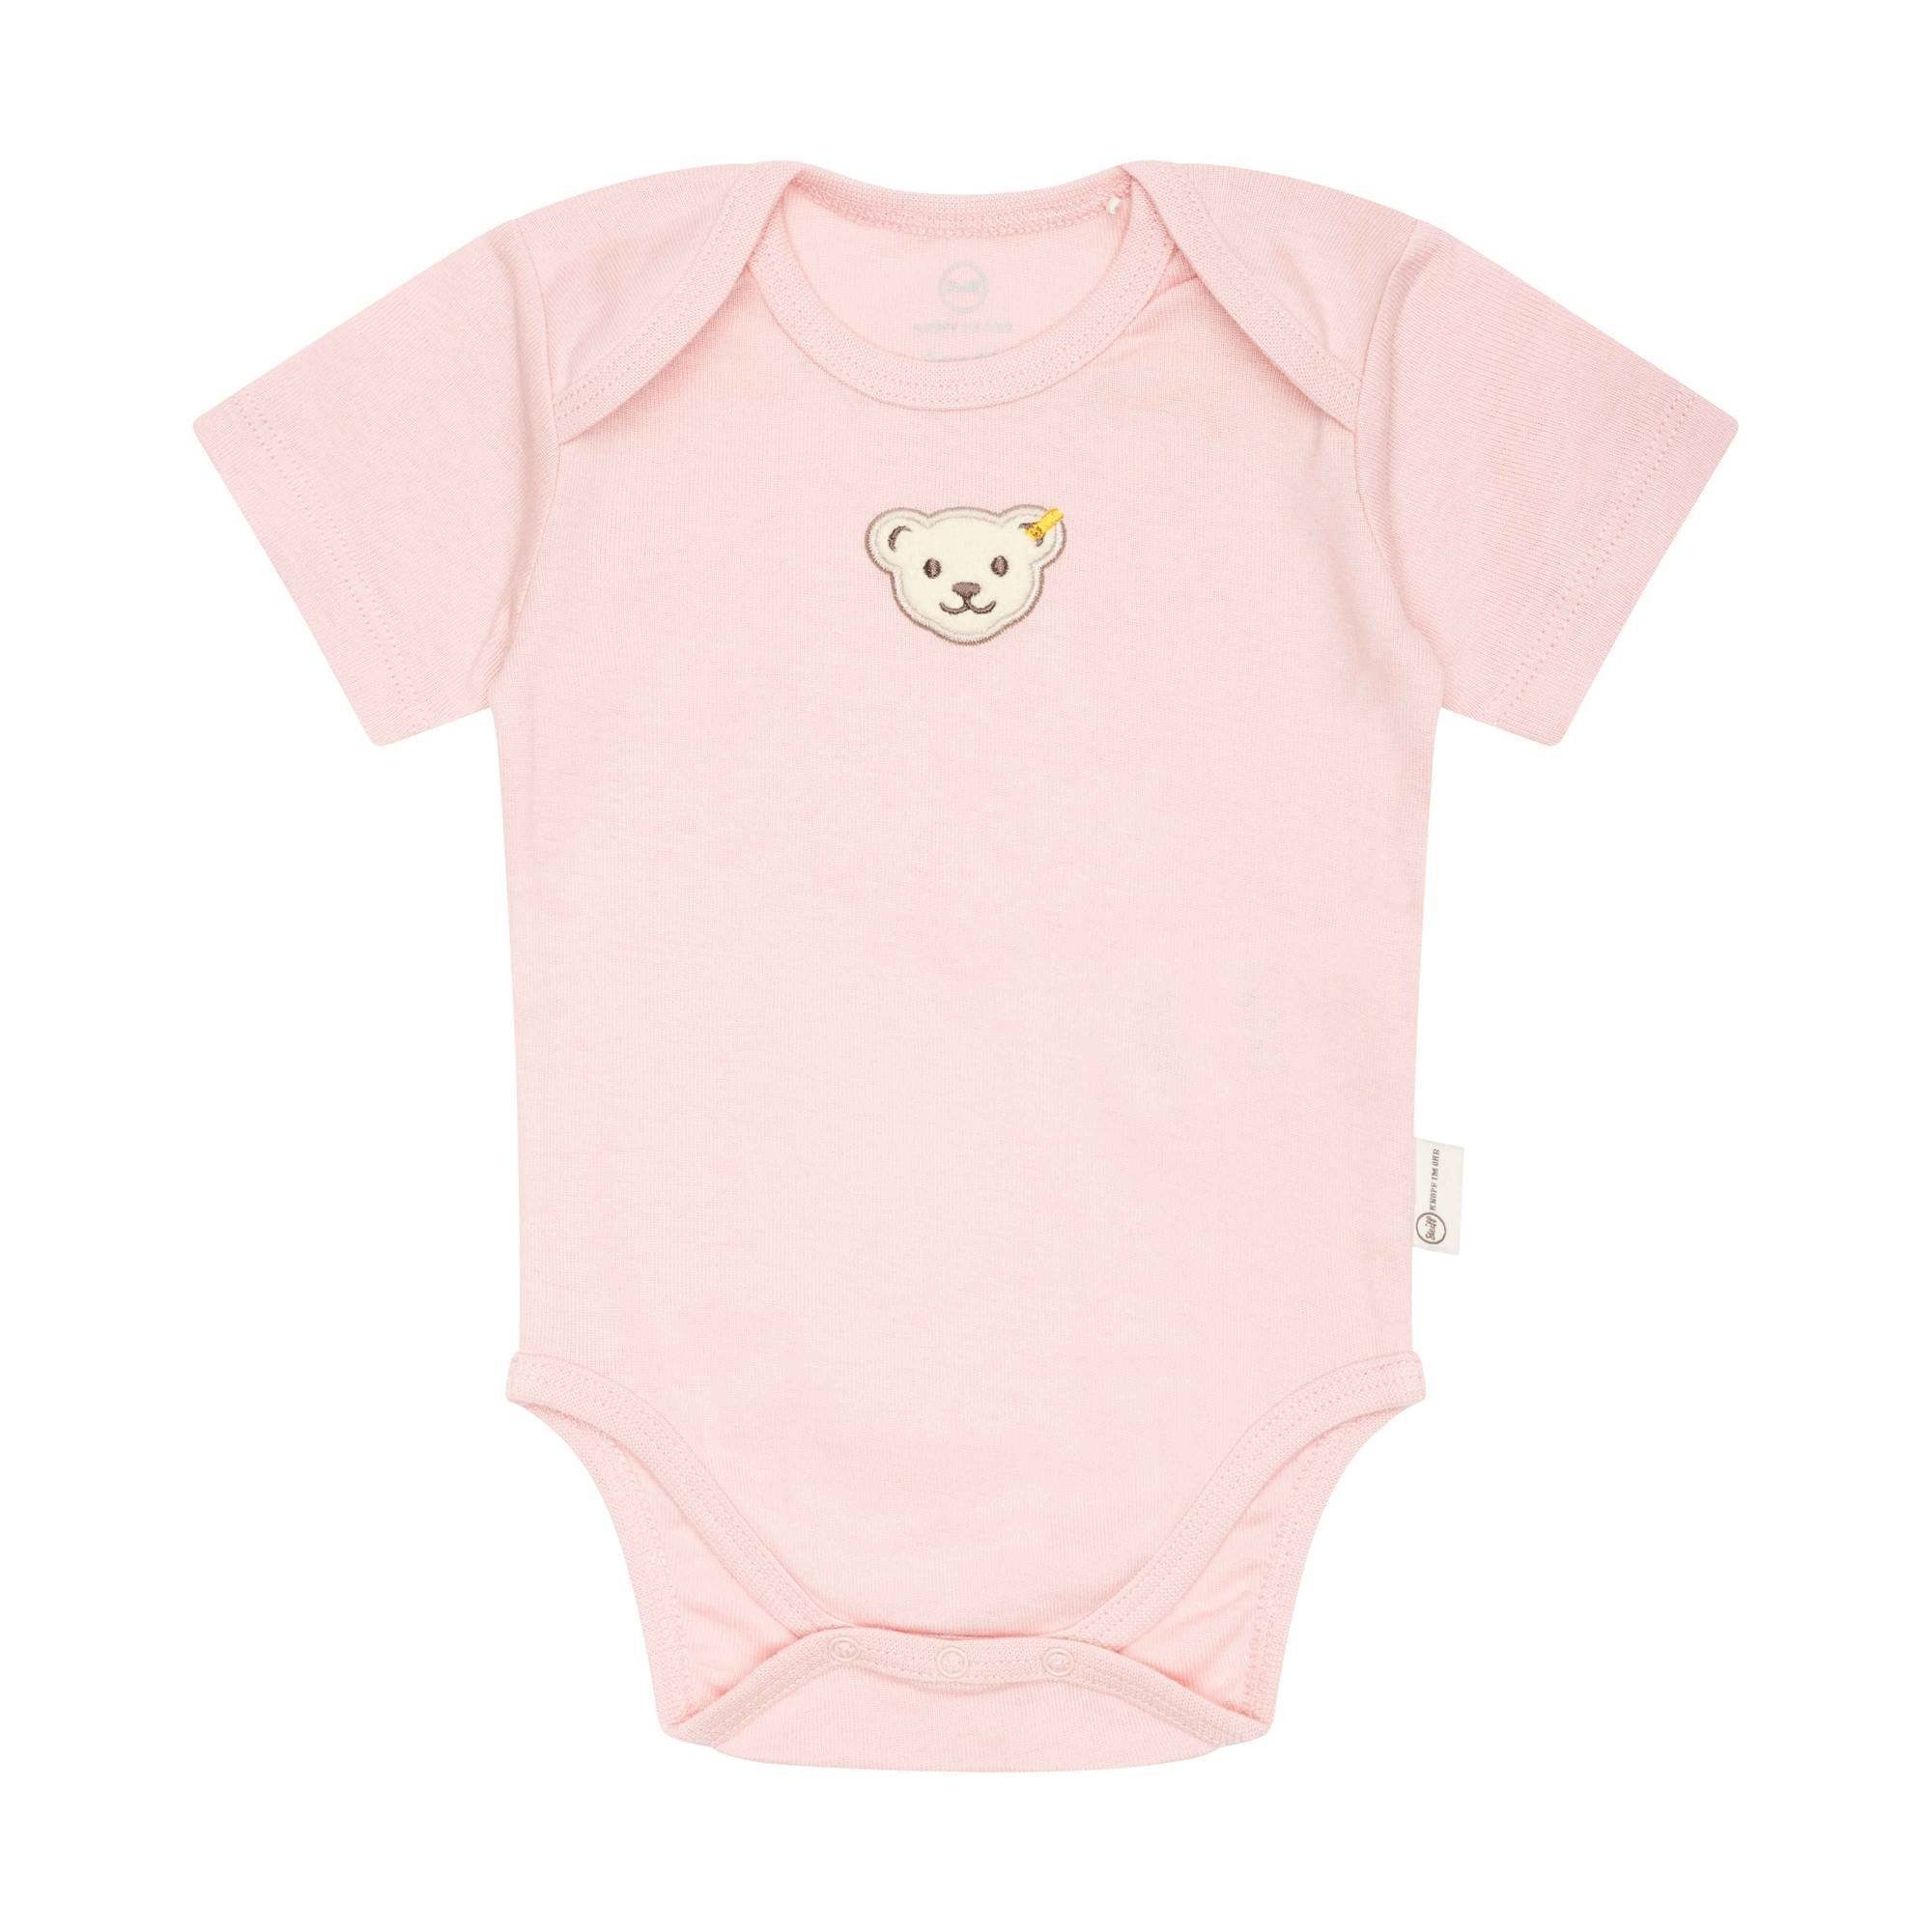 Baumwolle, Baby Strampler - Body Rosa Logo Bär, Steiff Strampler,